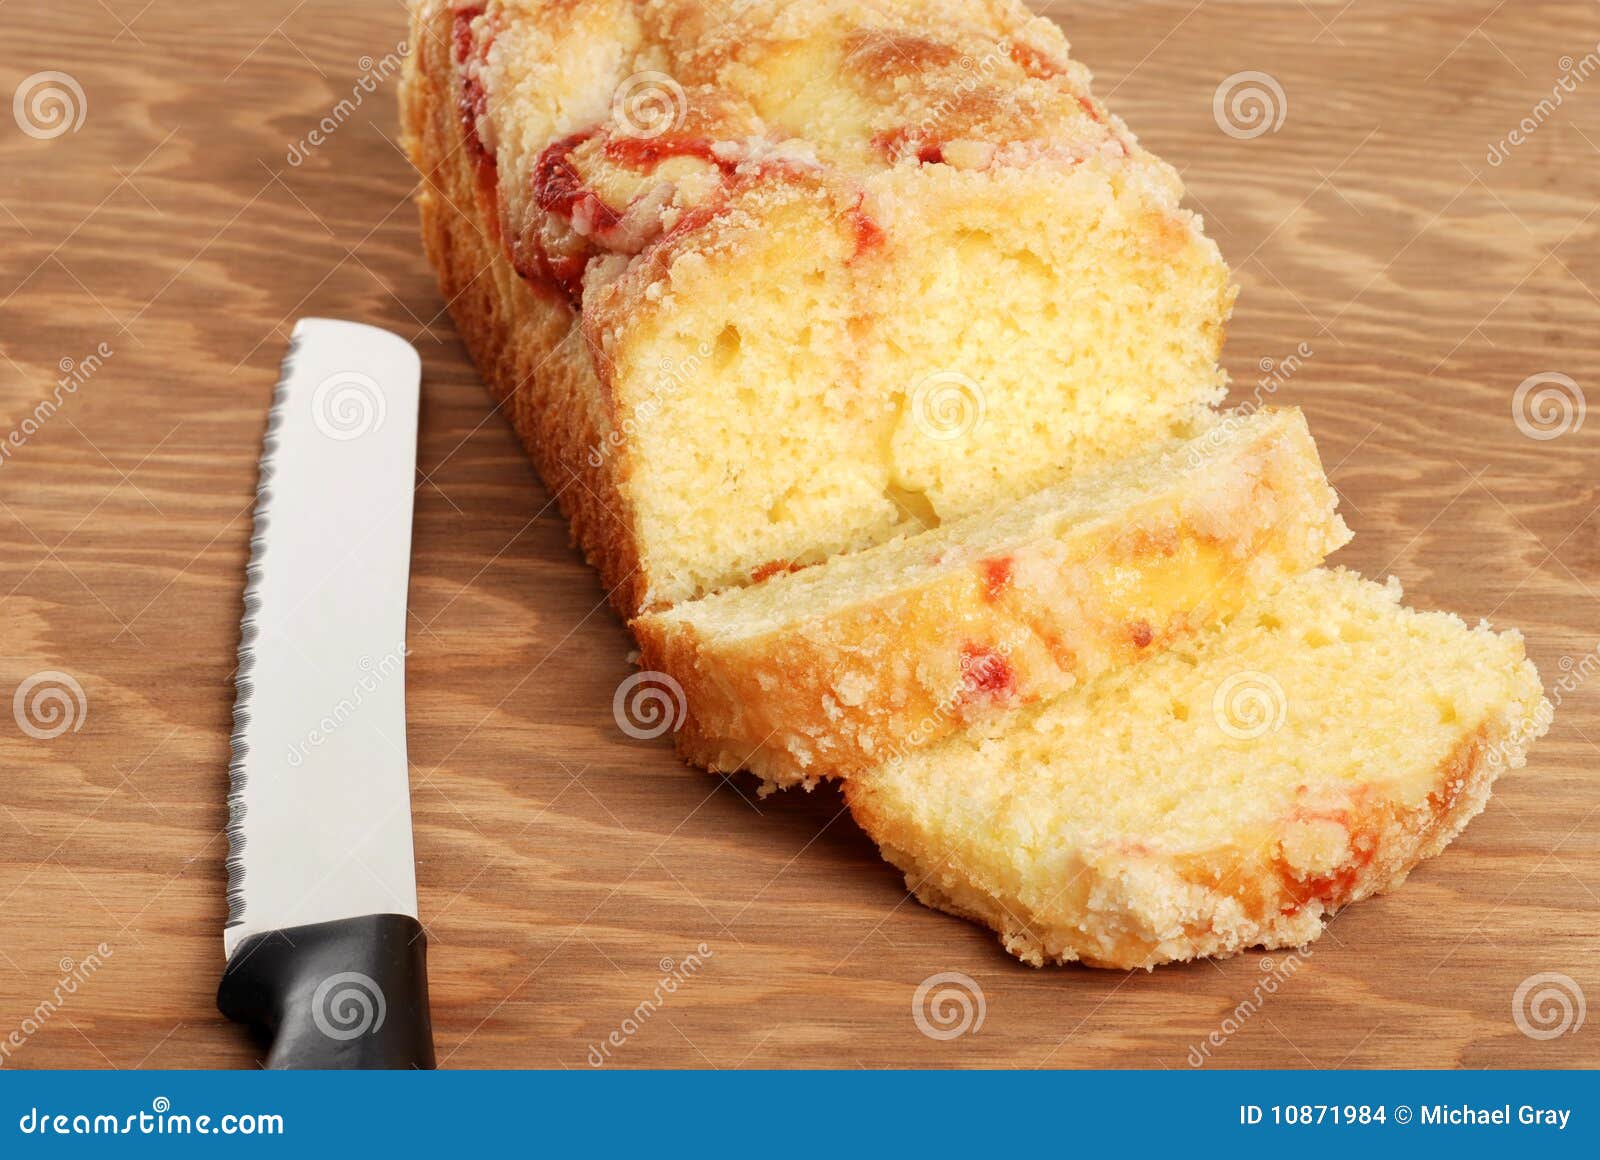 82+ Thousand Cake Knife Royalty-Free Images, Stock Photos